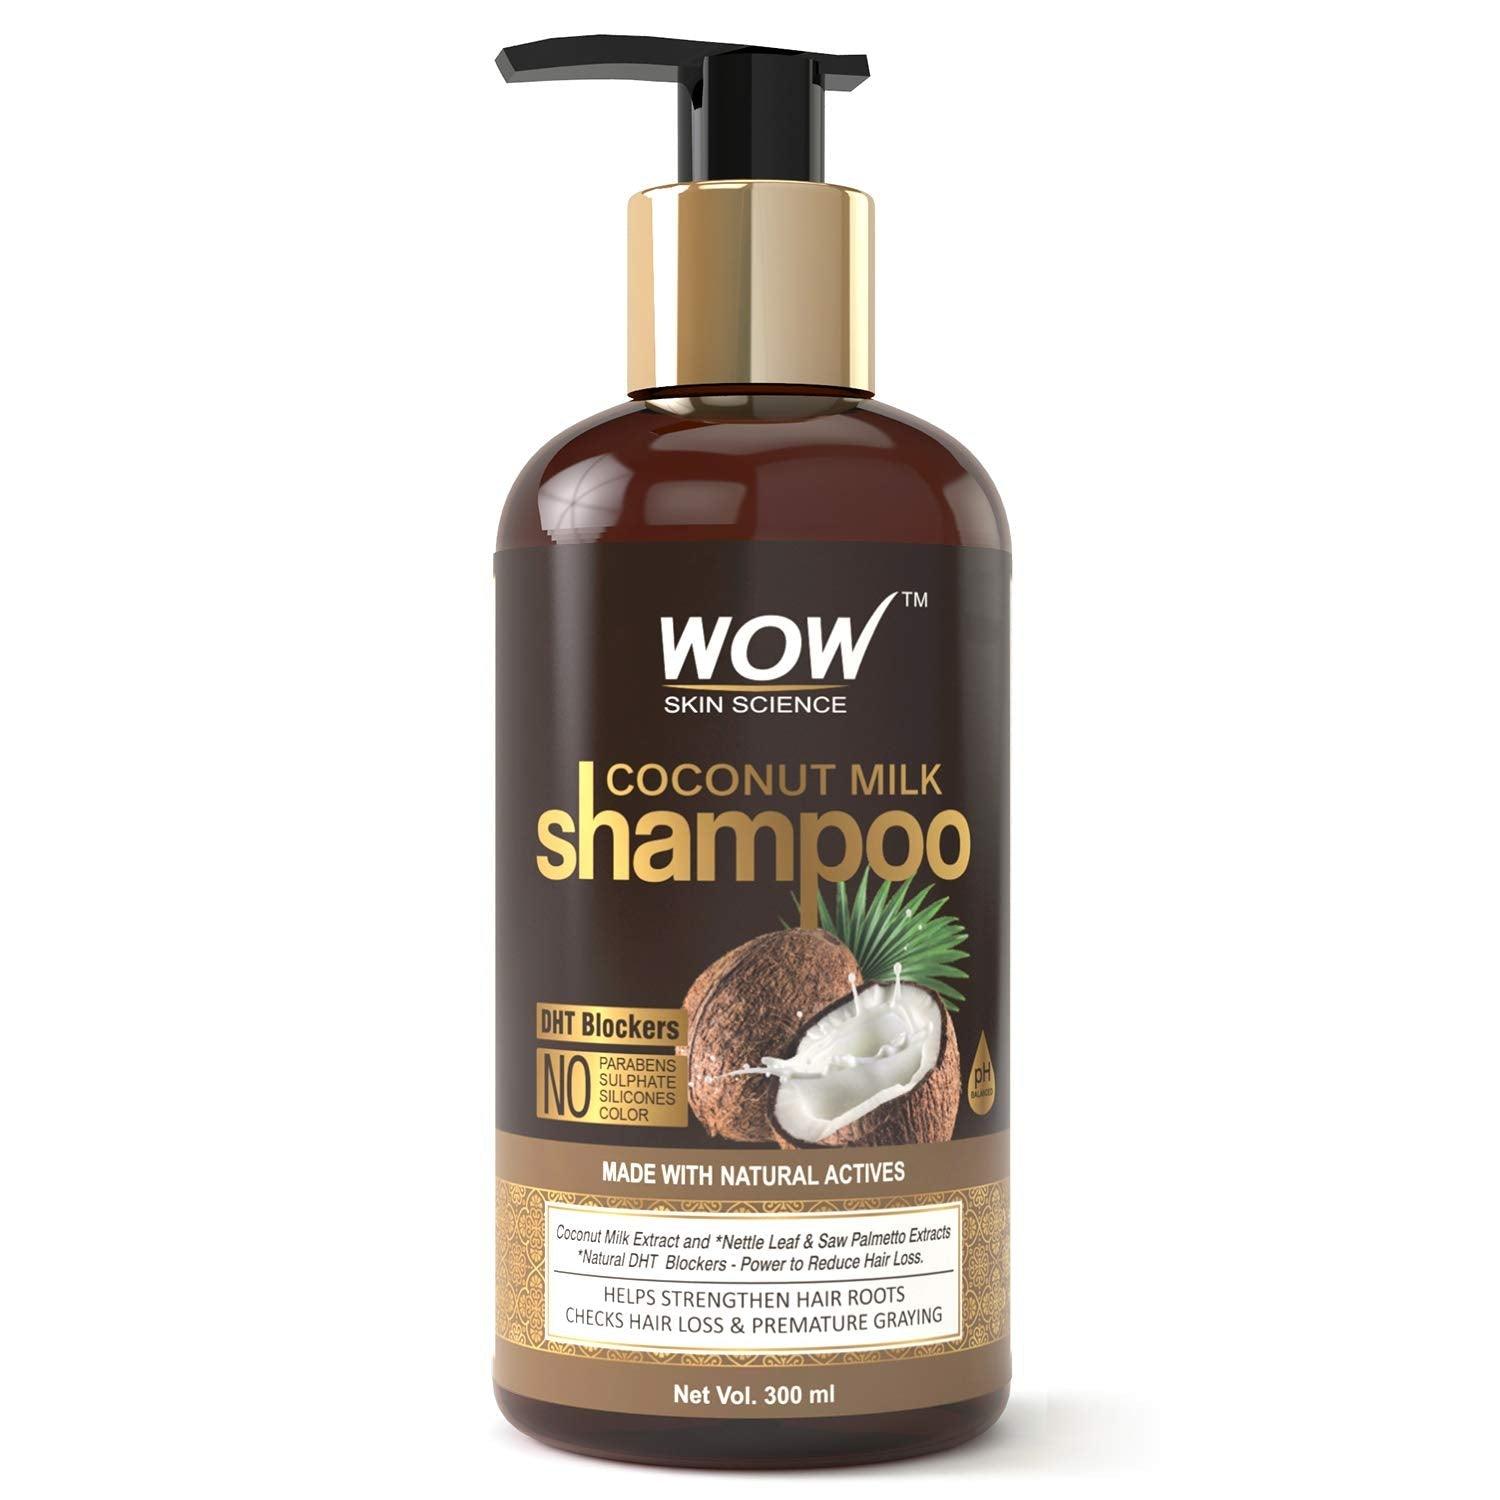 Wow Skin Science Coconut Milk Shampoo 300 ml - Mrayti Store